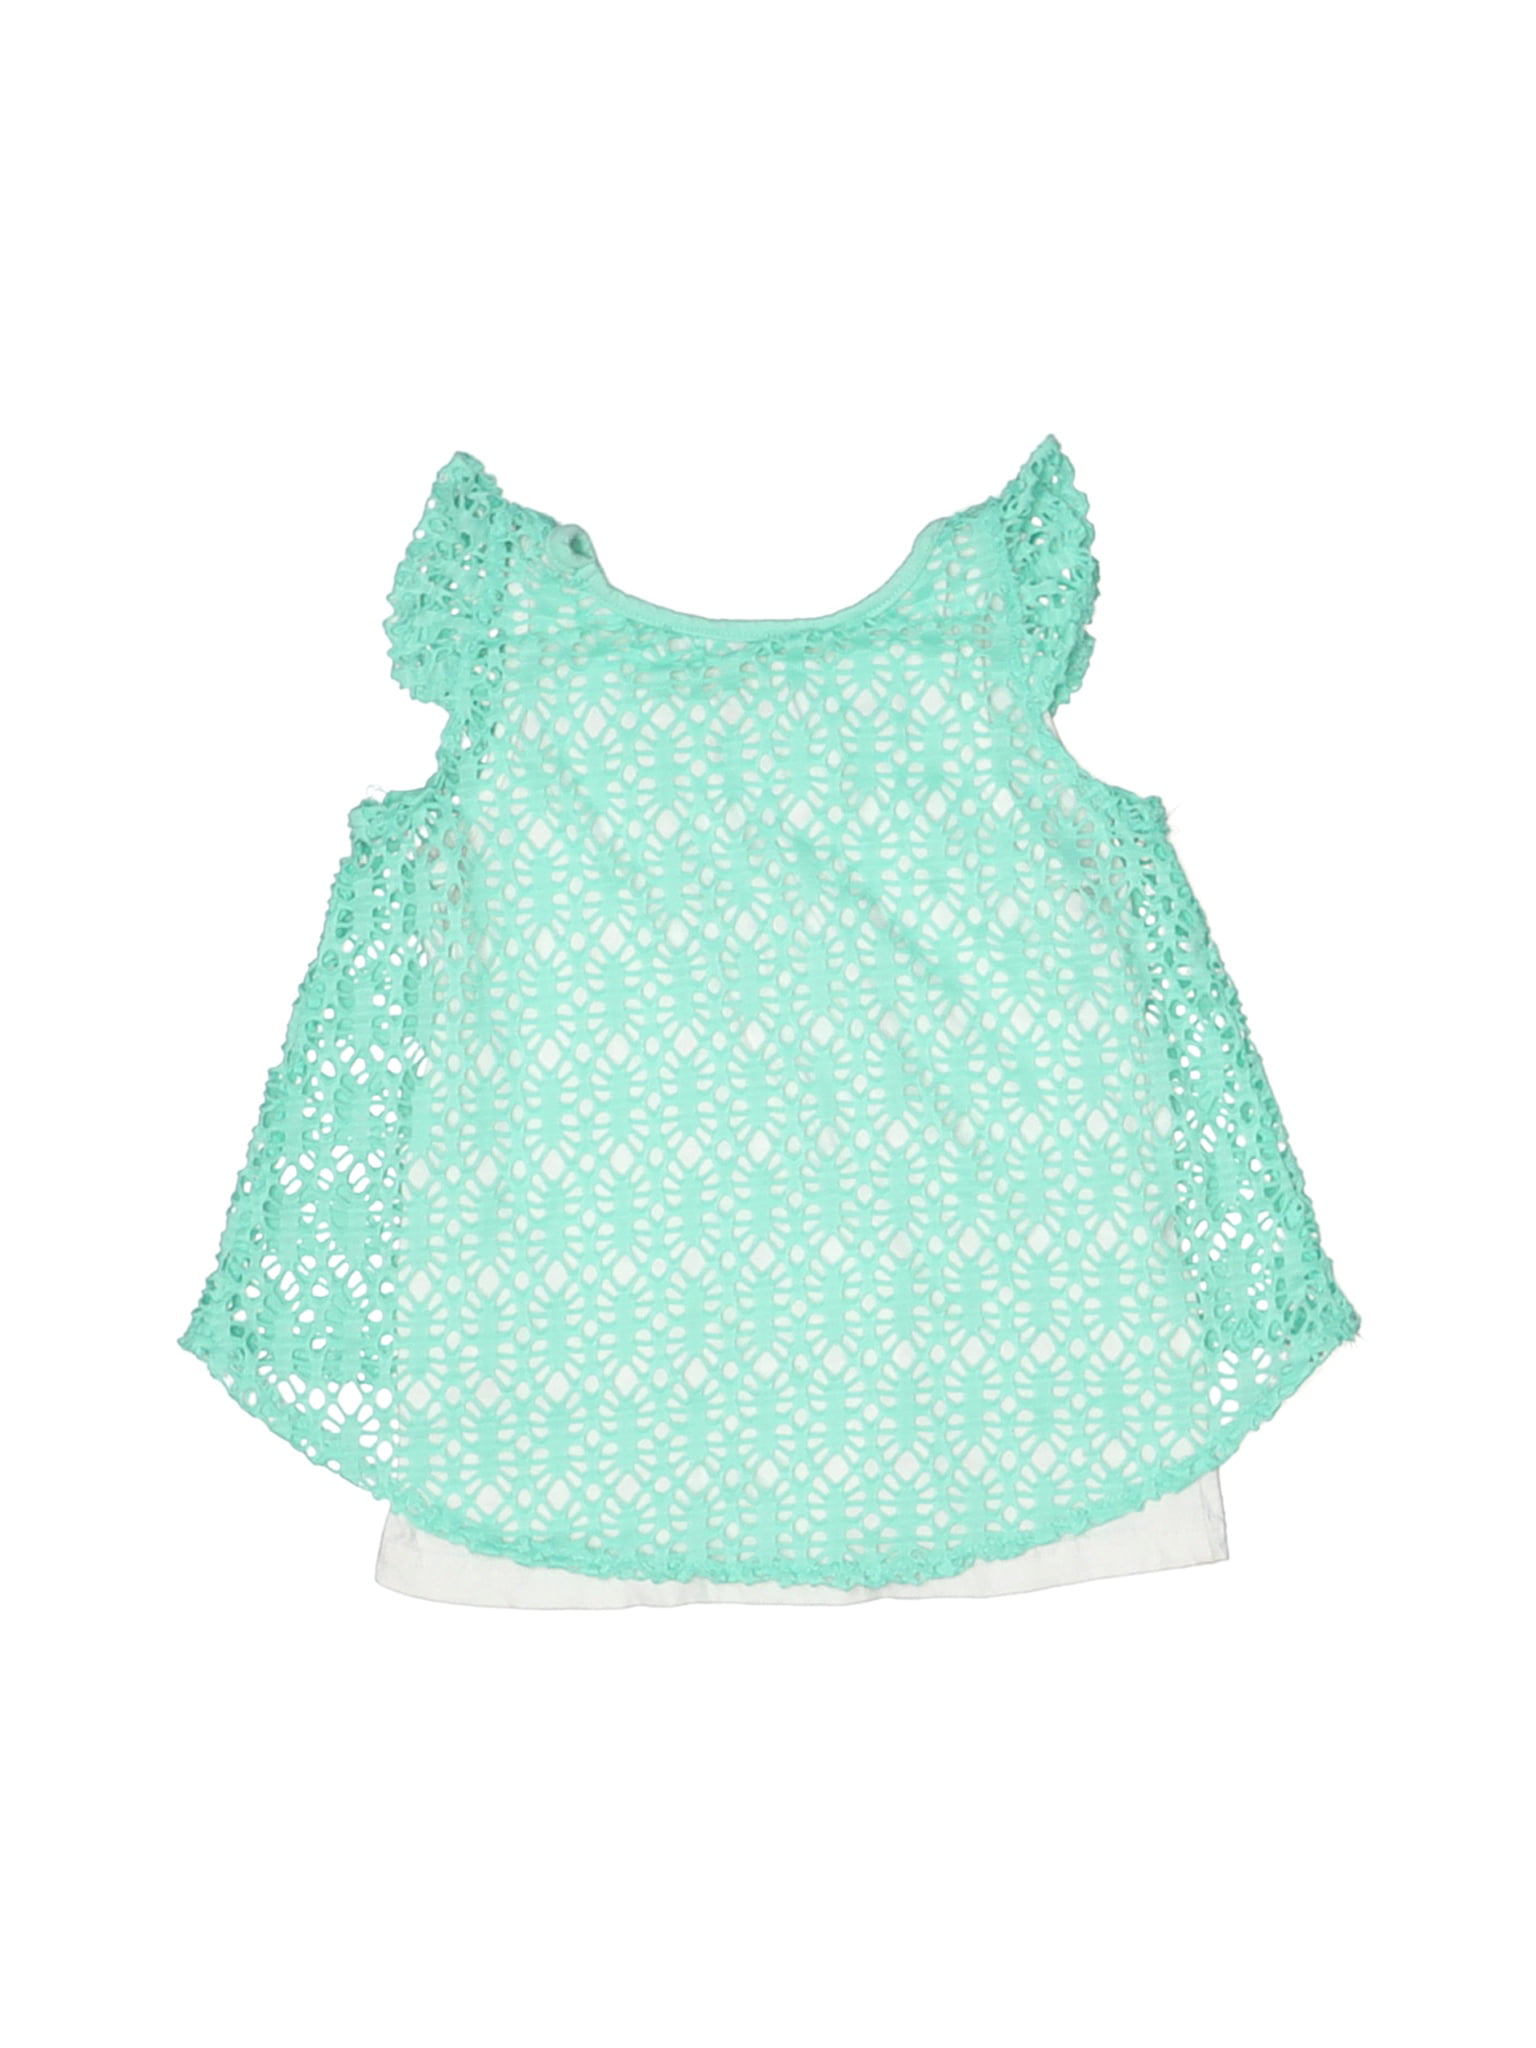 Pre-Owned Swiggles Girl's Size 3T Dress - Walmart.com